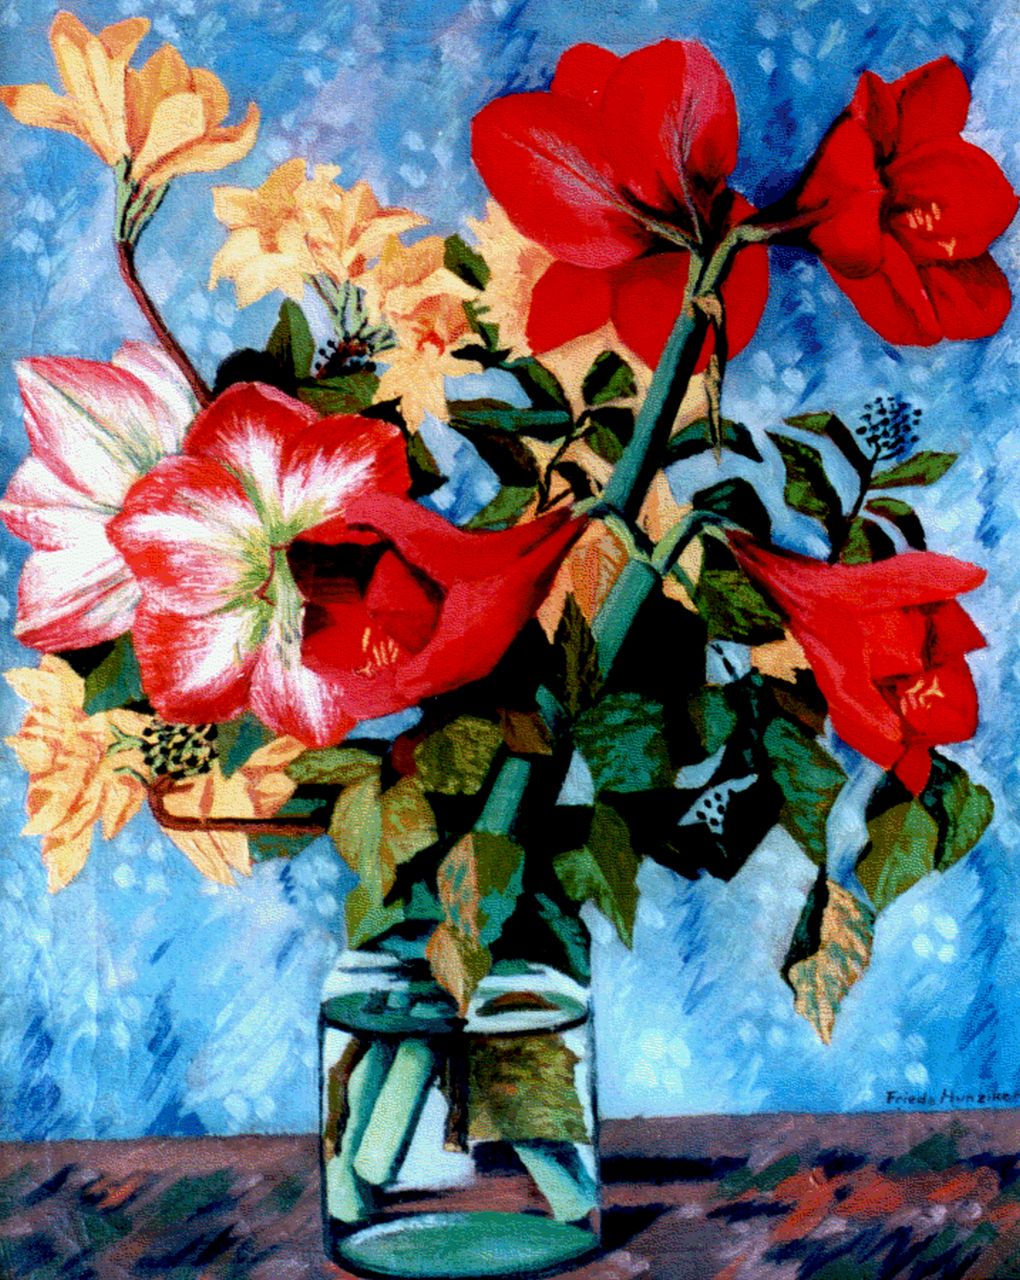 Hunziker F.  | Frieda Hunziker, A flower still life, oil on canvas 75.6 x 60.5 cm, signed l.r. and early '43